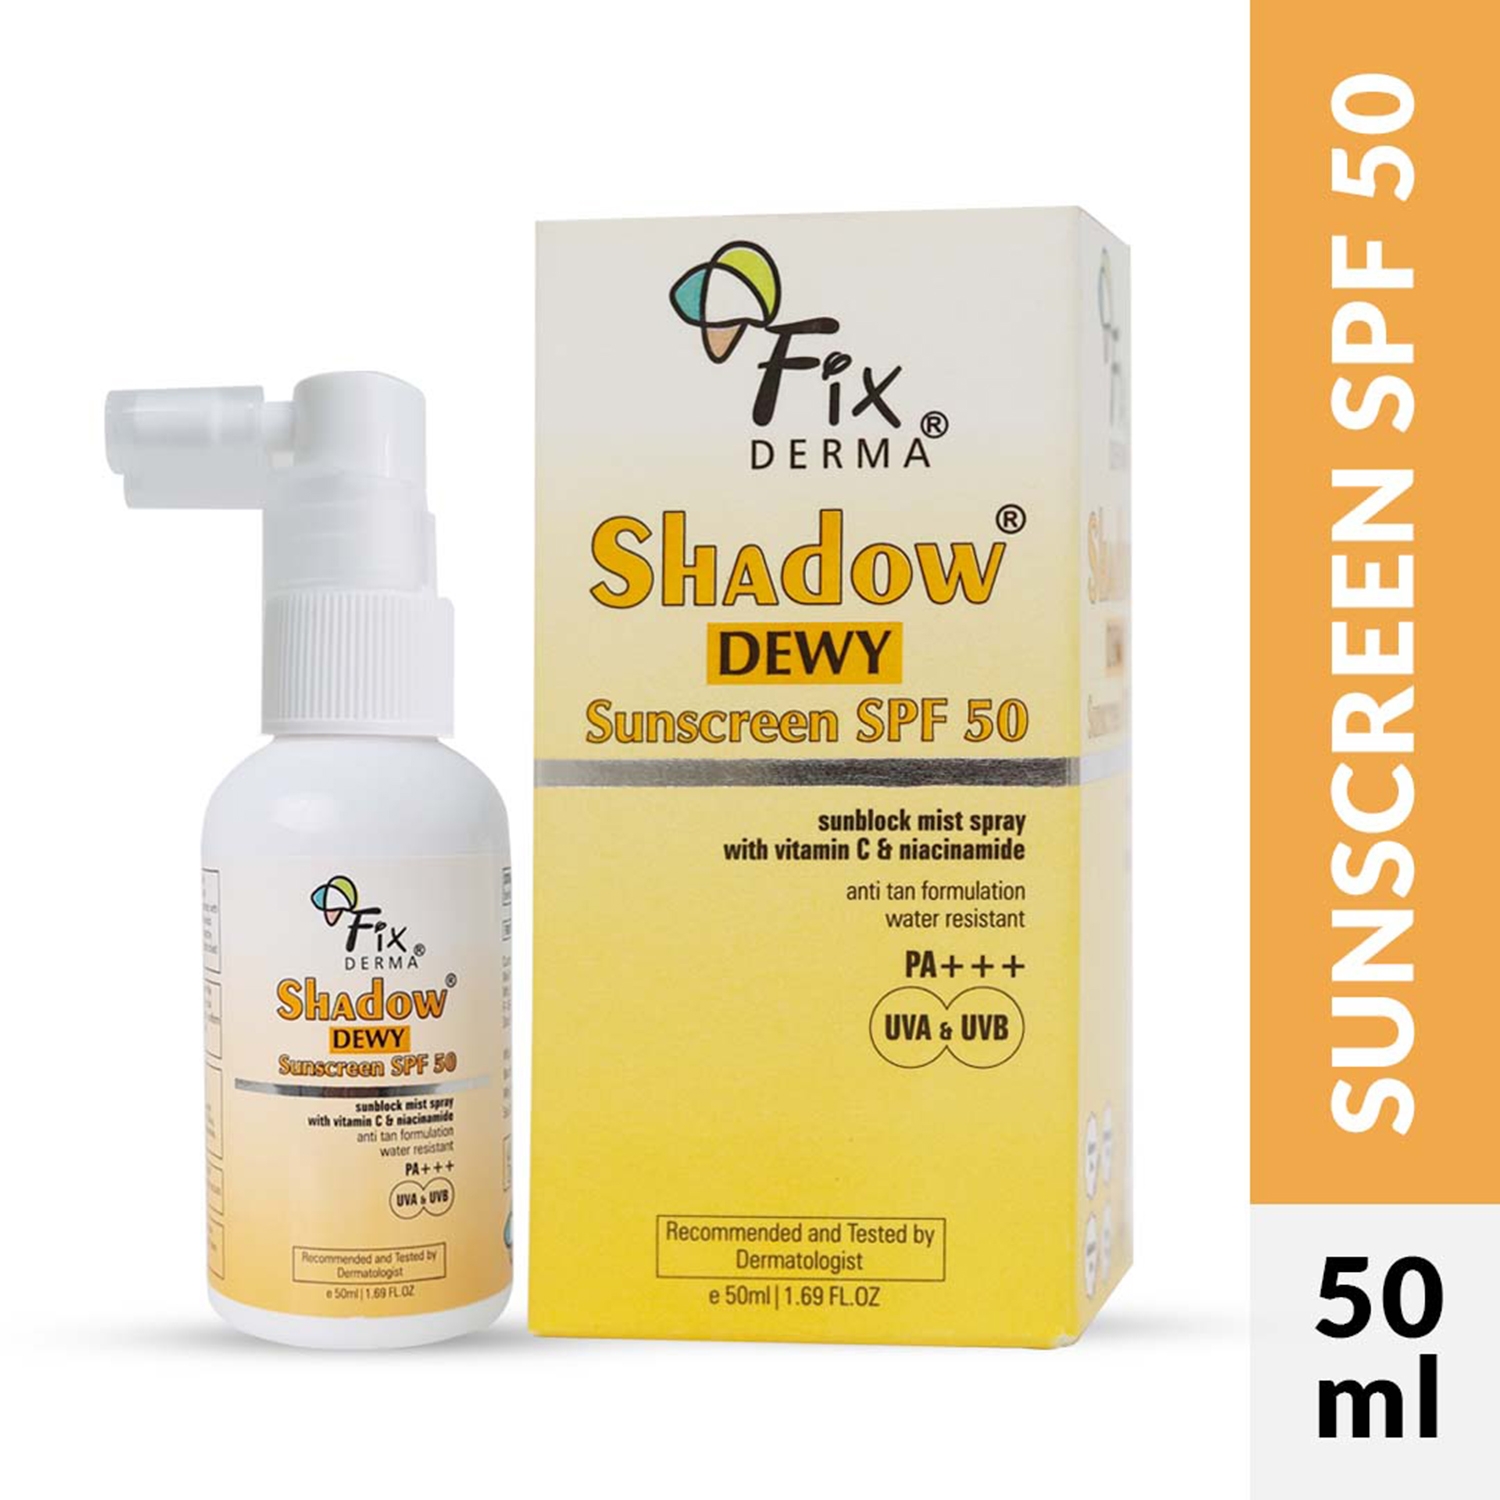 Fixderma | Fixderma Shadow Dewy Sunscreen Spray Prevents Tanning with Vitamin C & Niacinamide (50ml)